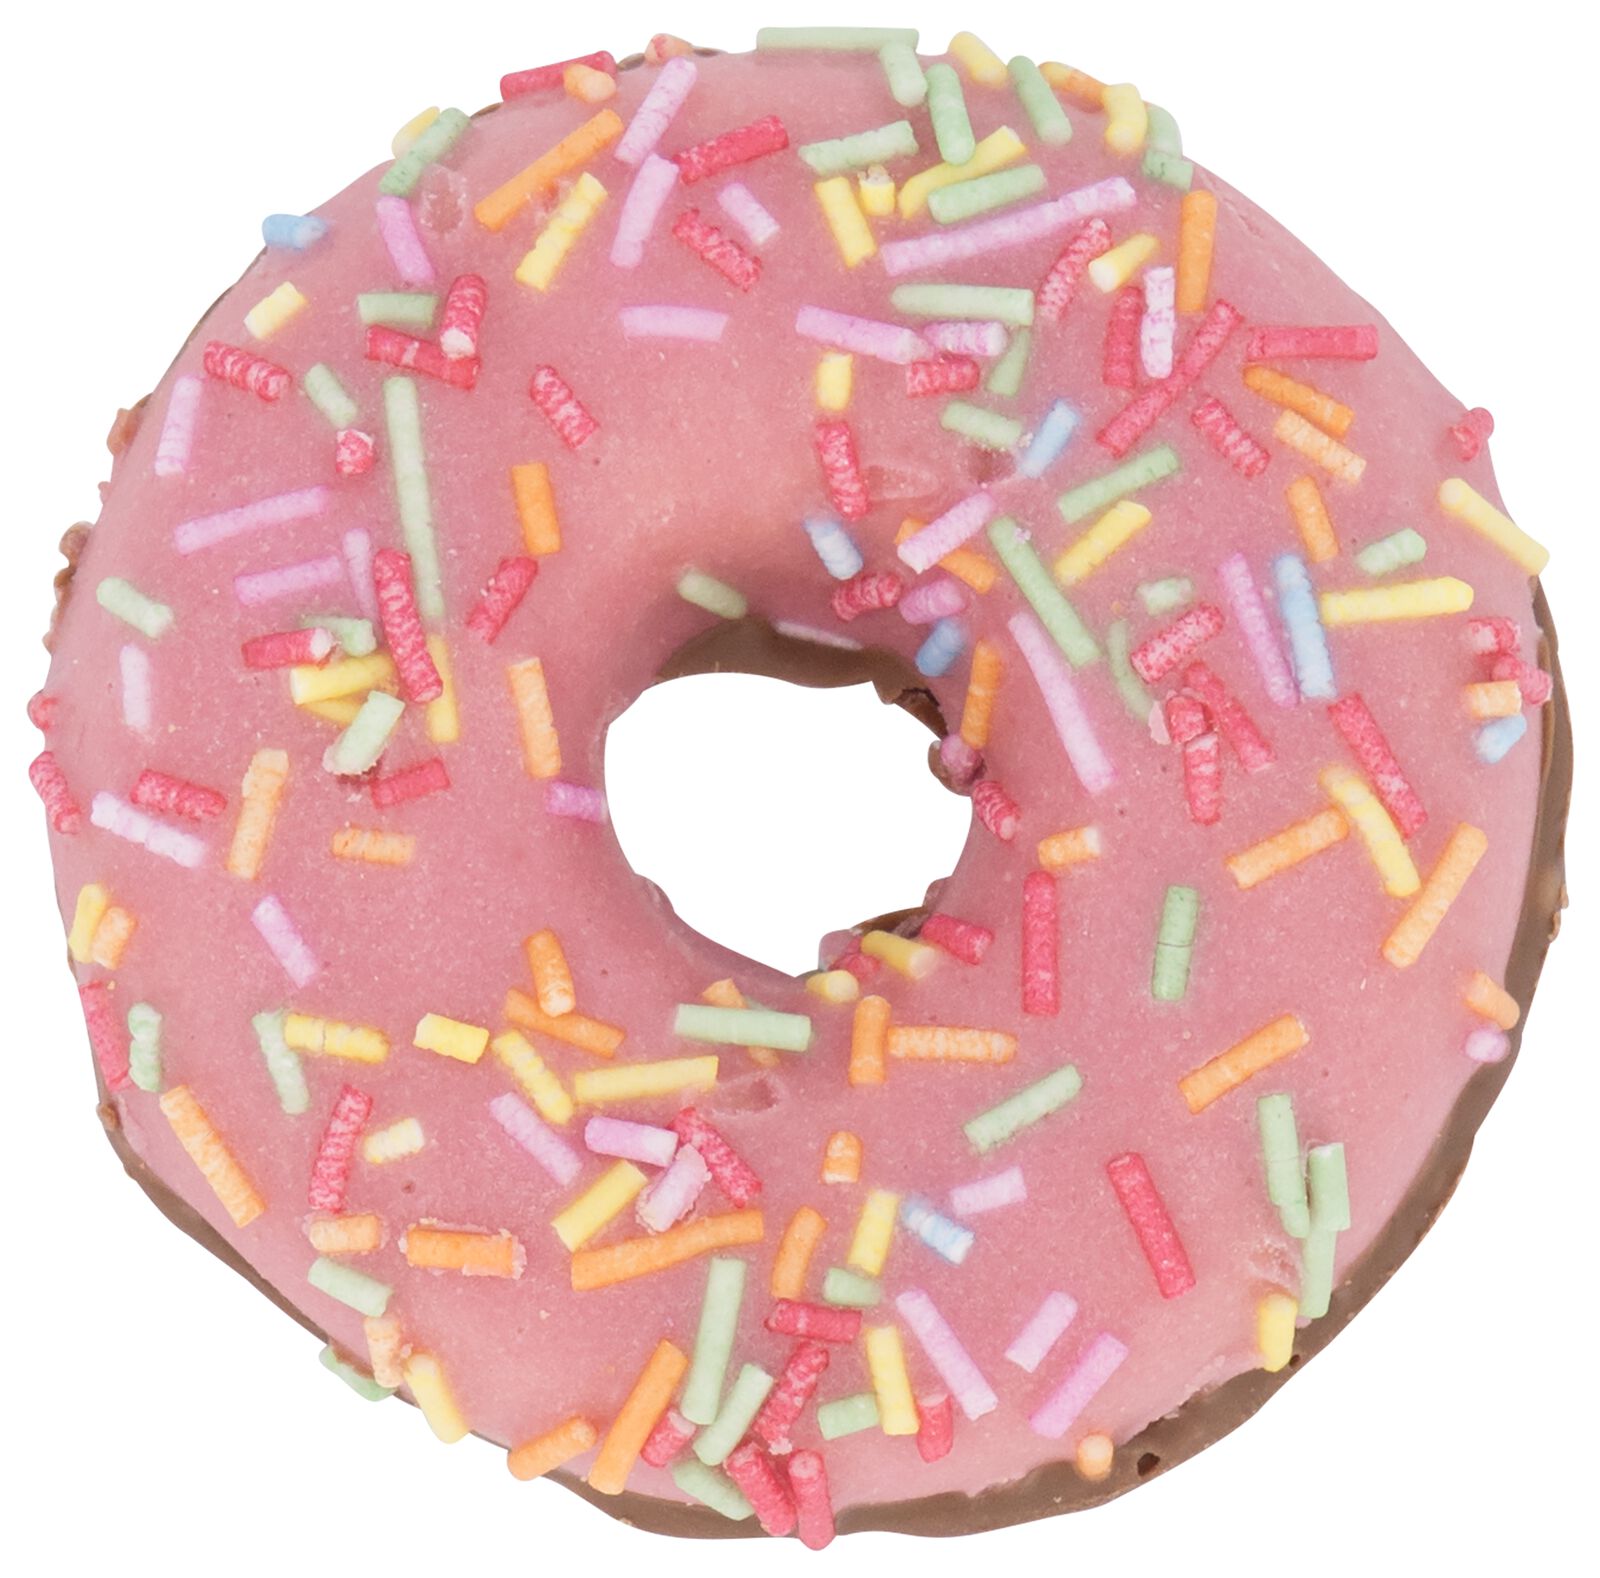 donut koekjes 160gram - 10809000 - HEMA